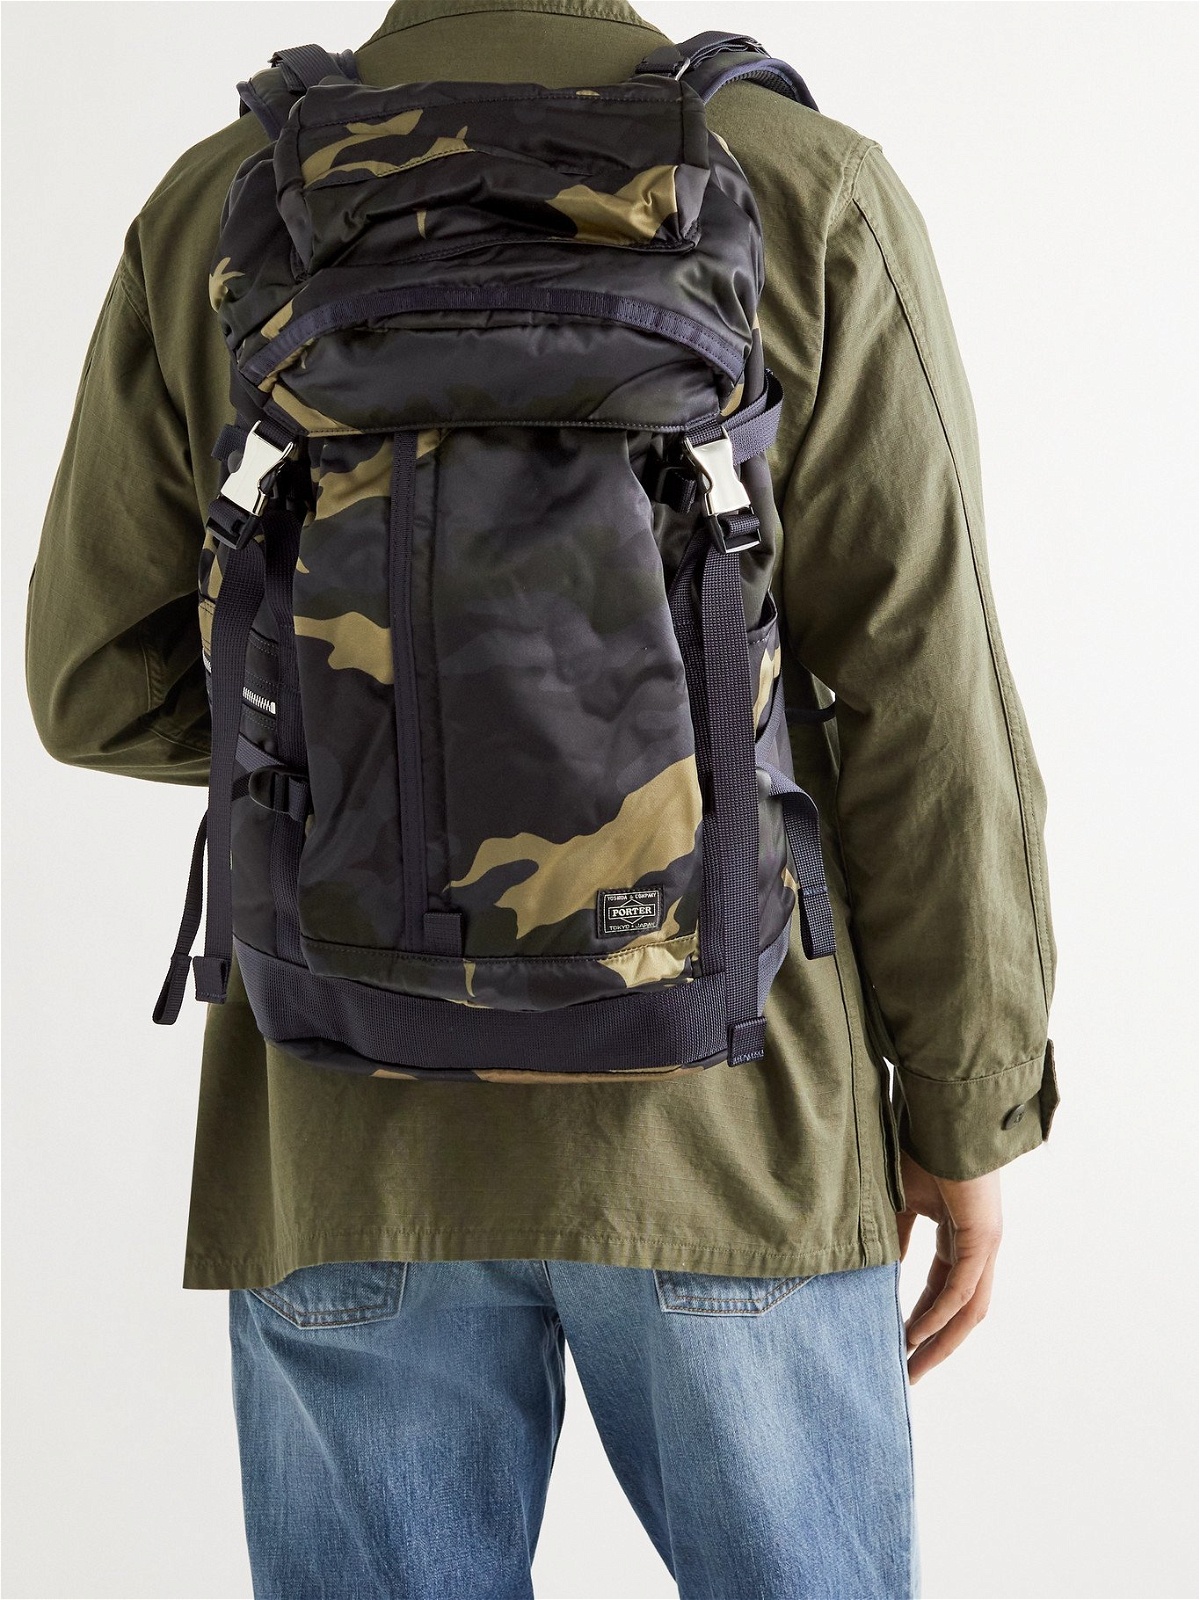 PORTER-YOSHIDA & CO - Counter Shade Camouflage-Print Nylon Backpack ...